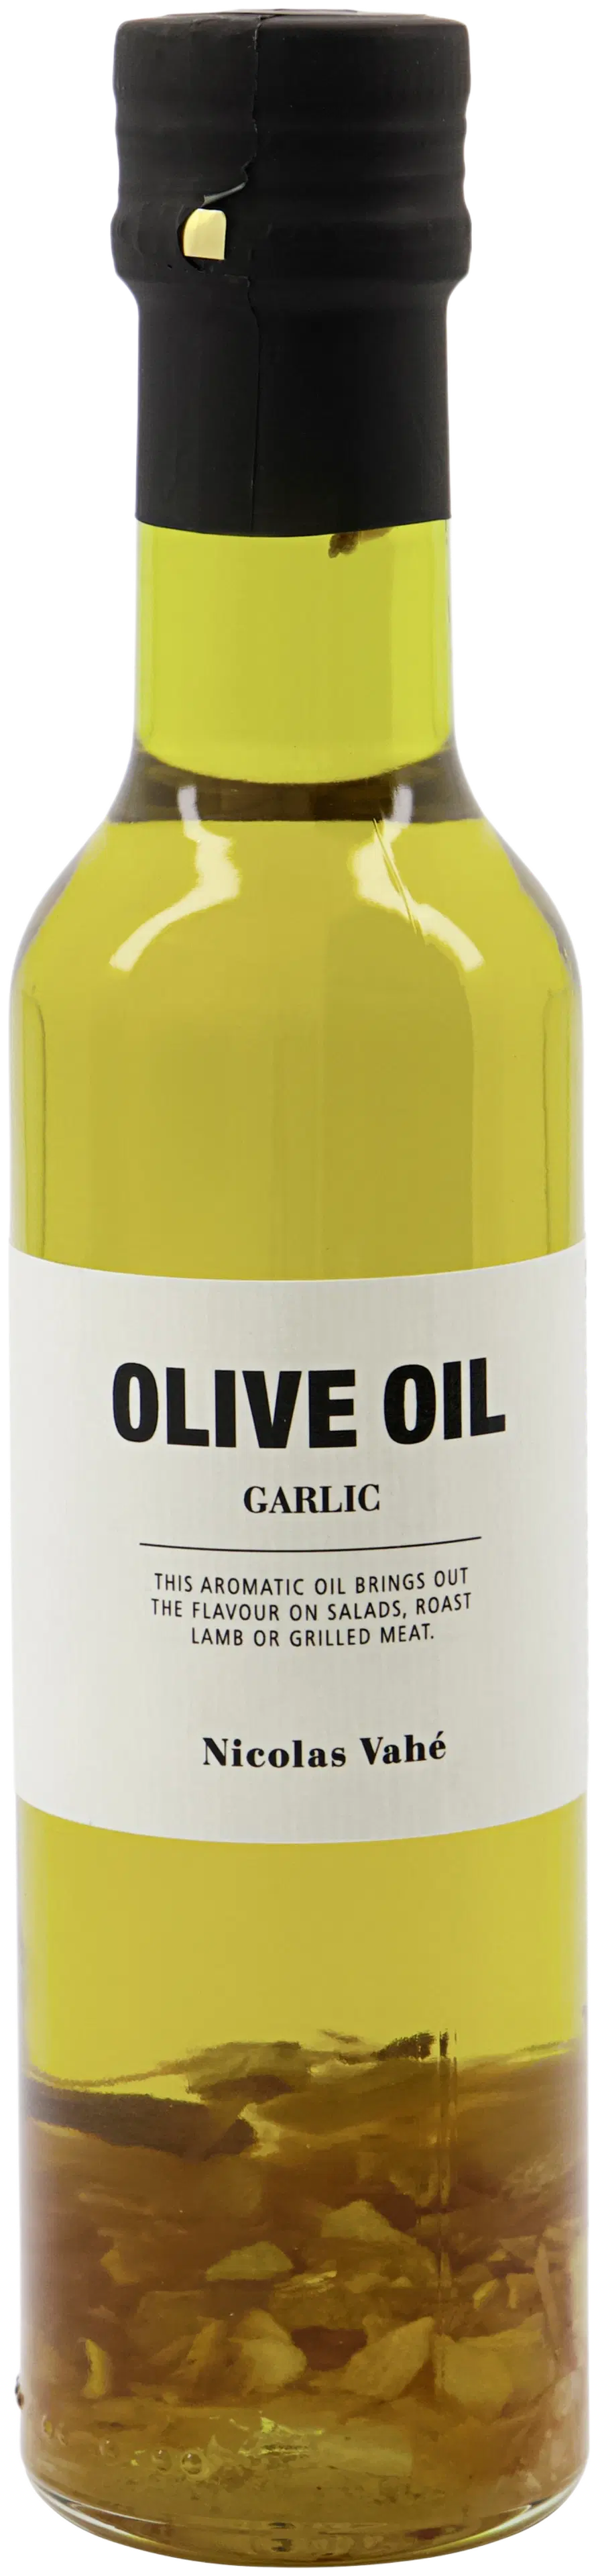 Nicolas Vahé oliiviöljy valkosipuli 25 cl